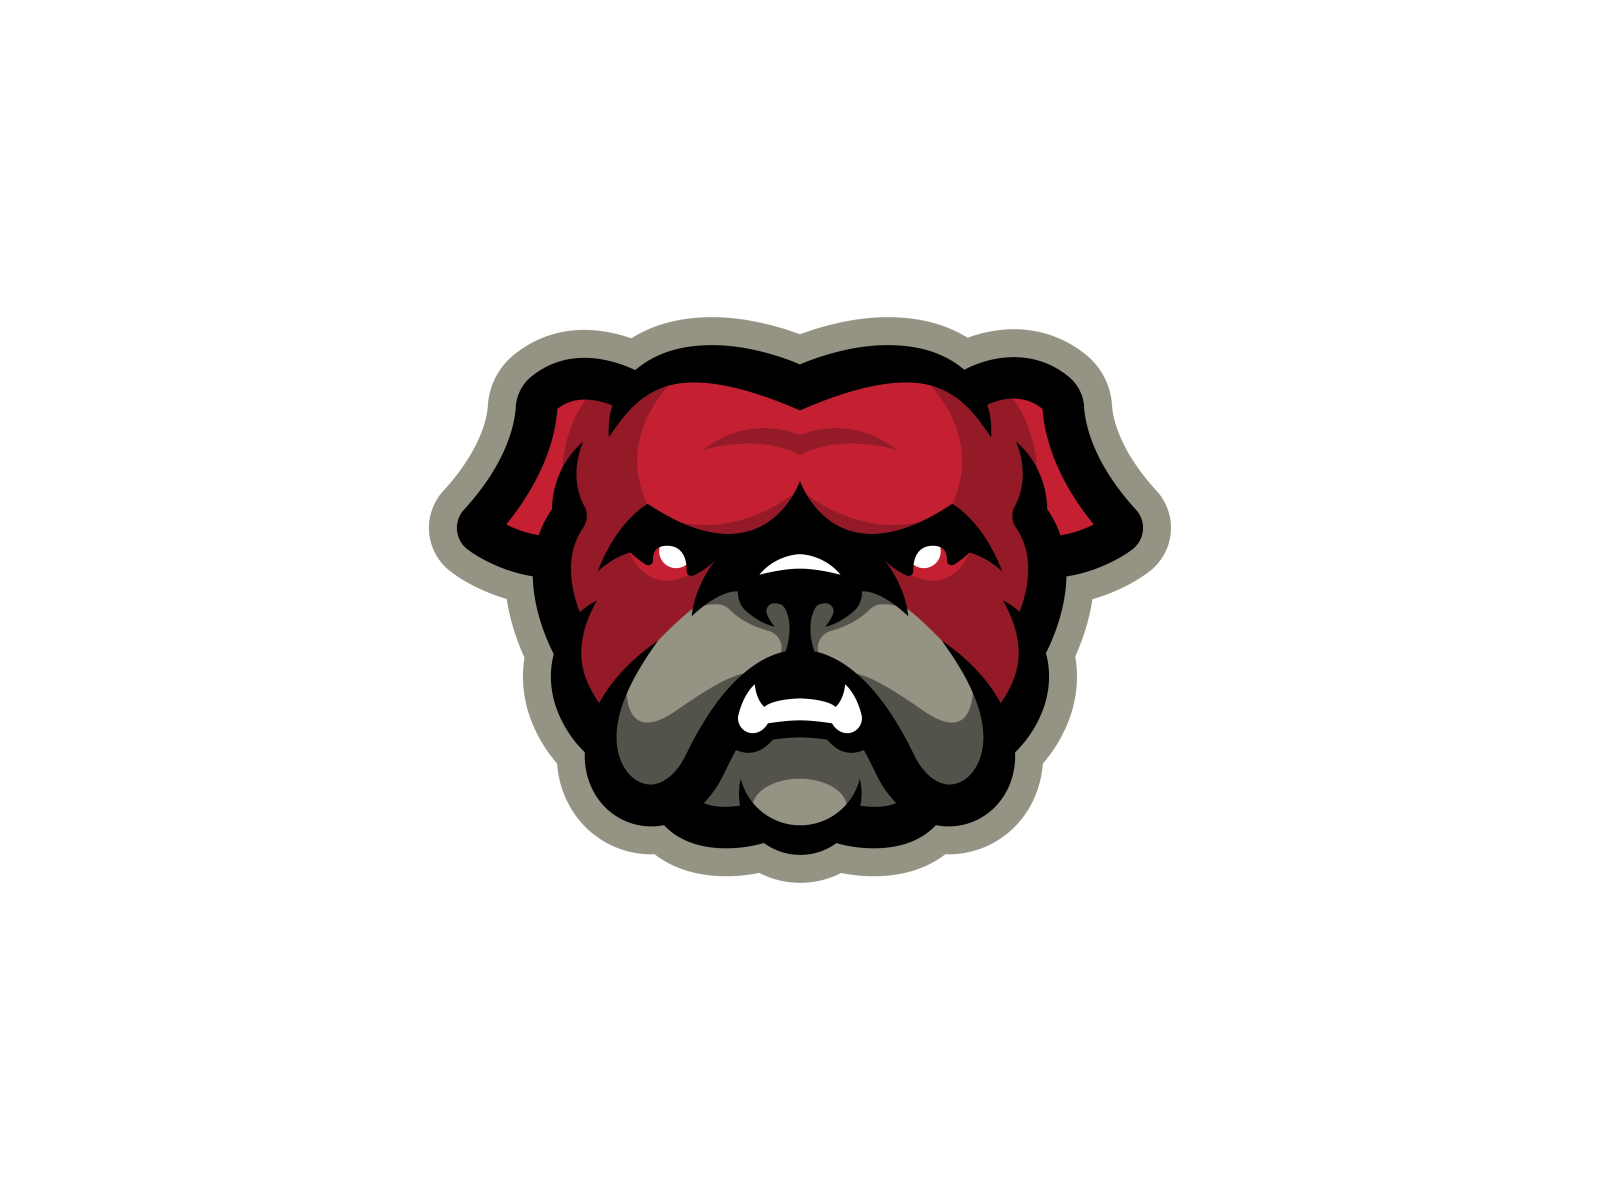 Bulldog logo mascot | For sale by Sergey Zhur on Dribbble